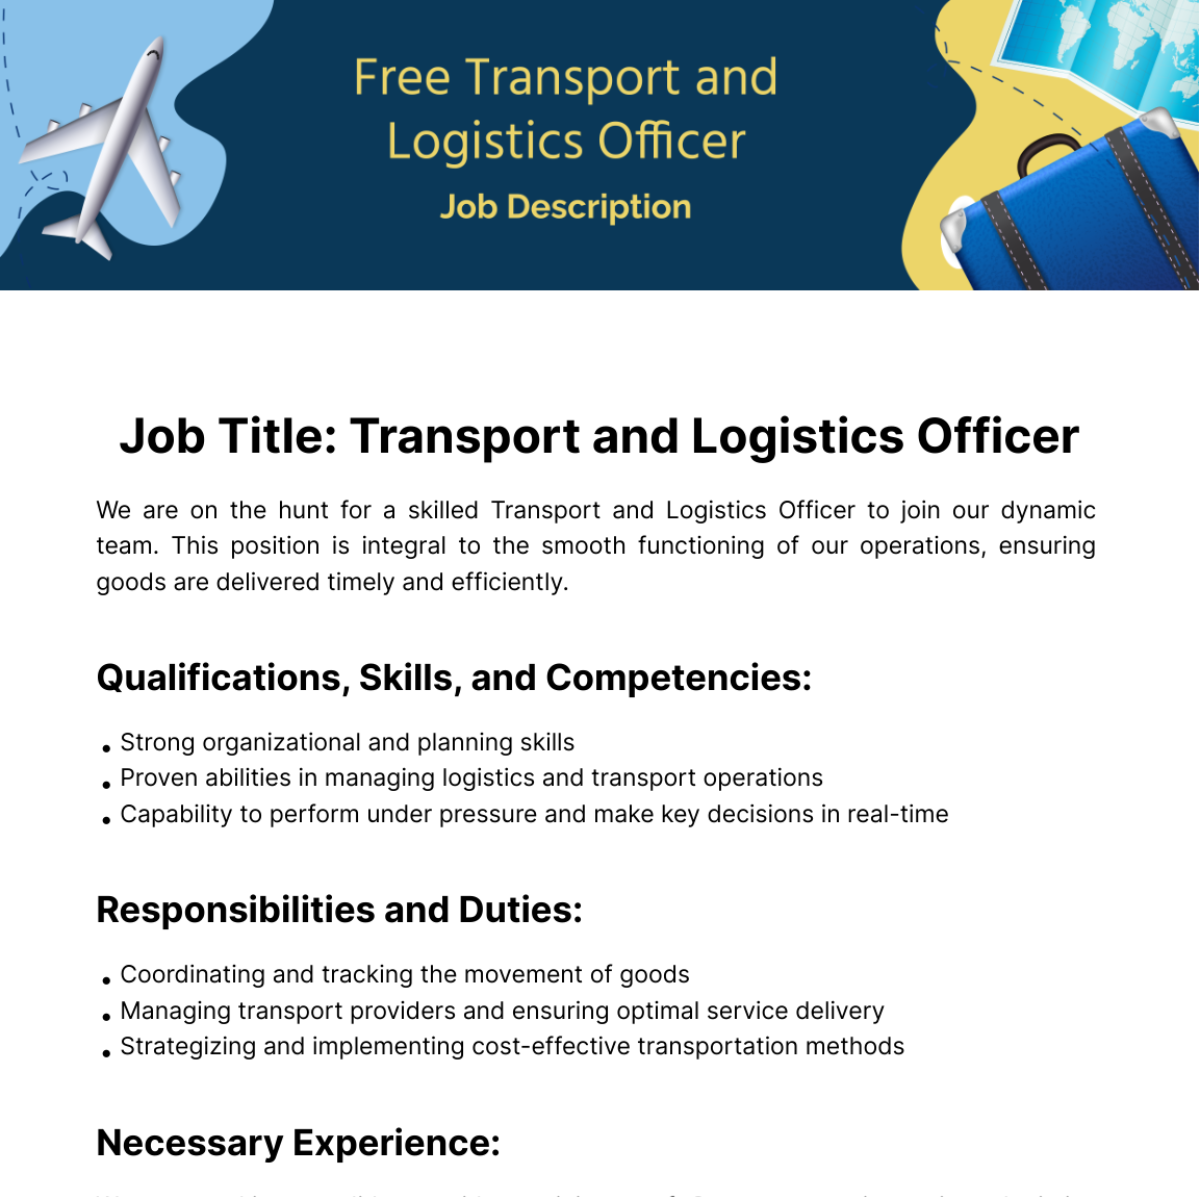 Free Transport and Logistics Officer Job Description Template